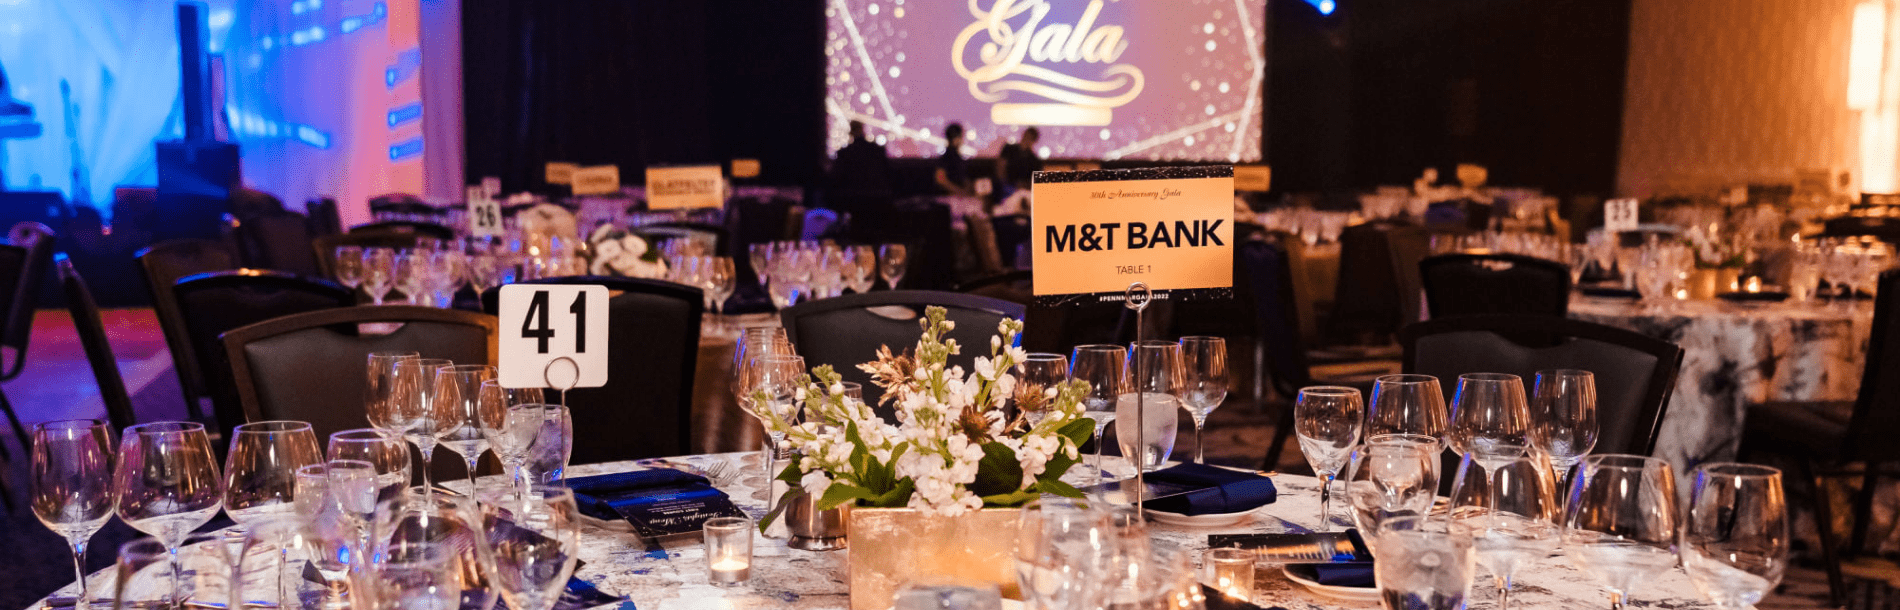 Gala table in ballroom